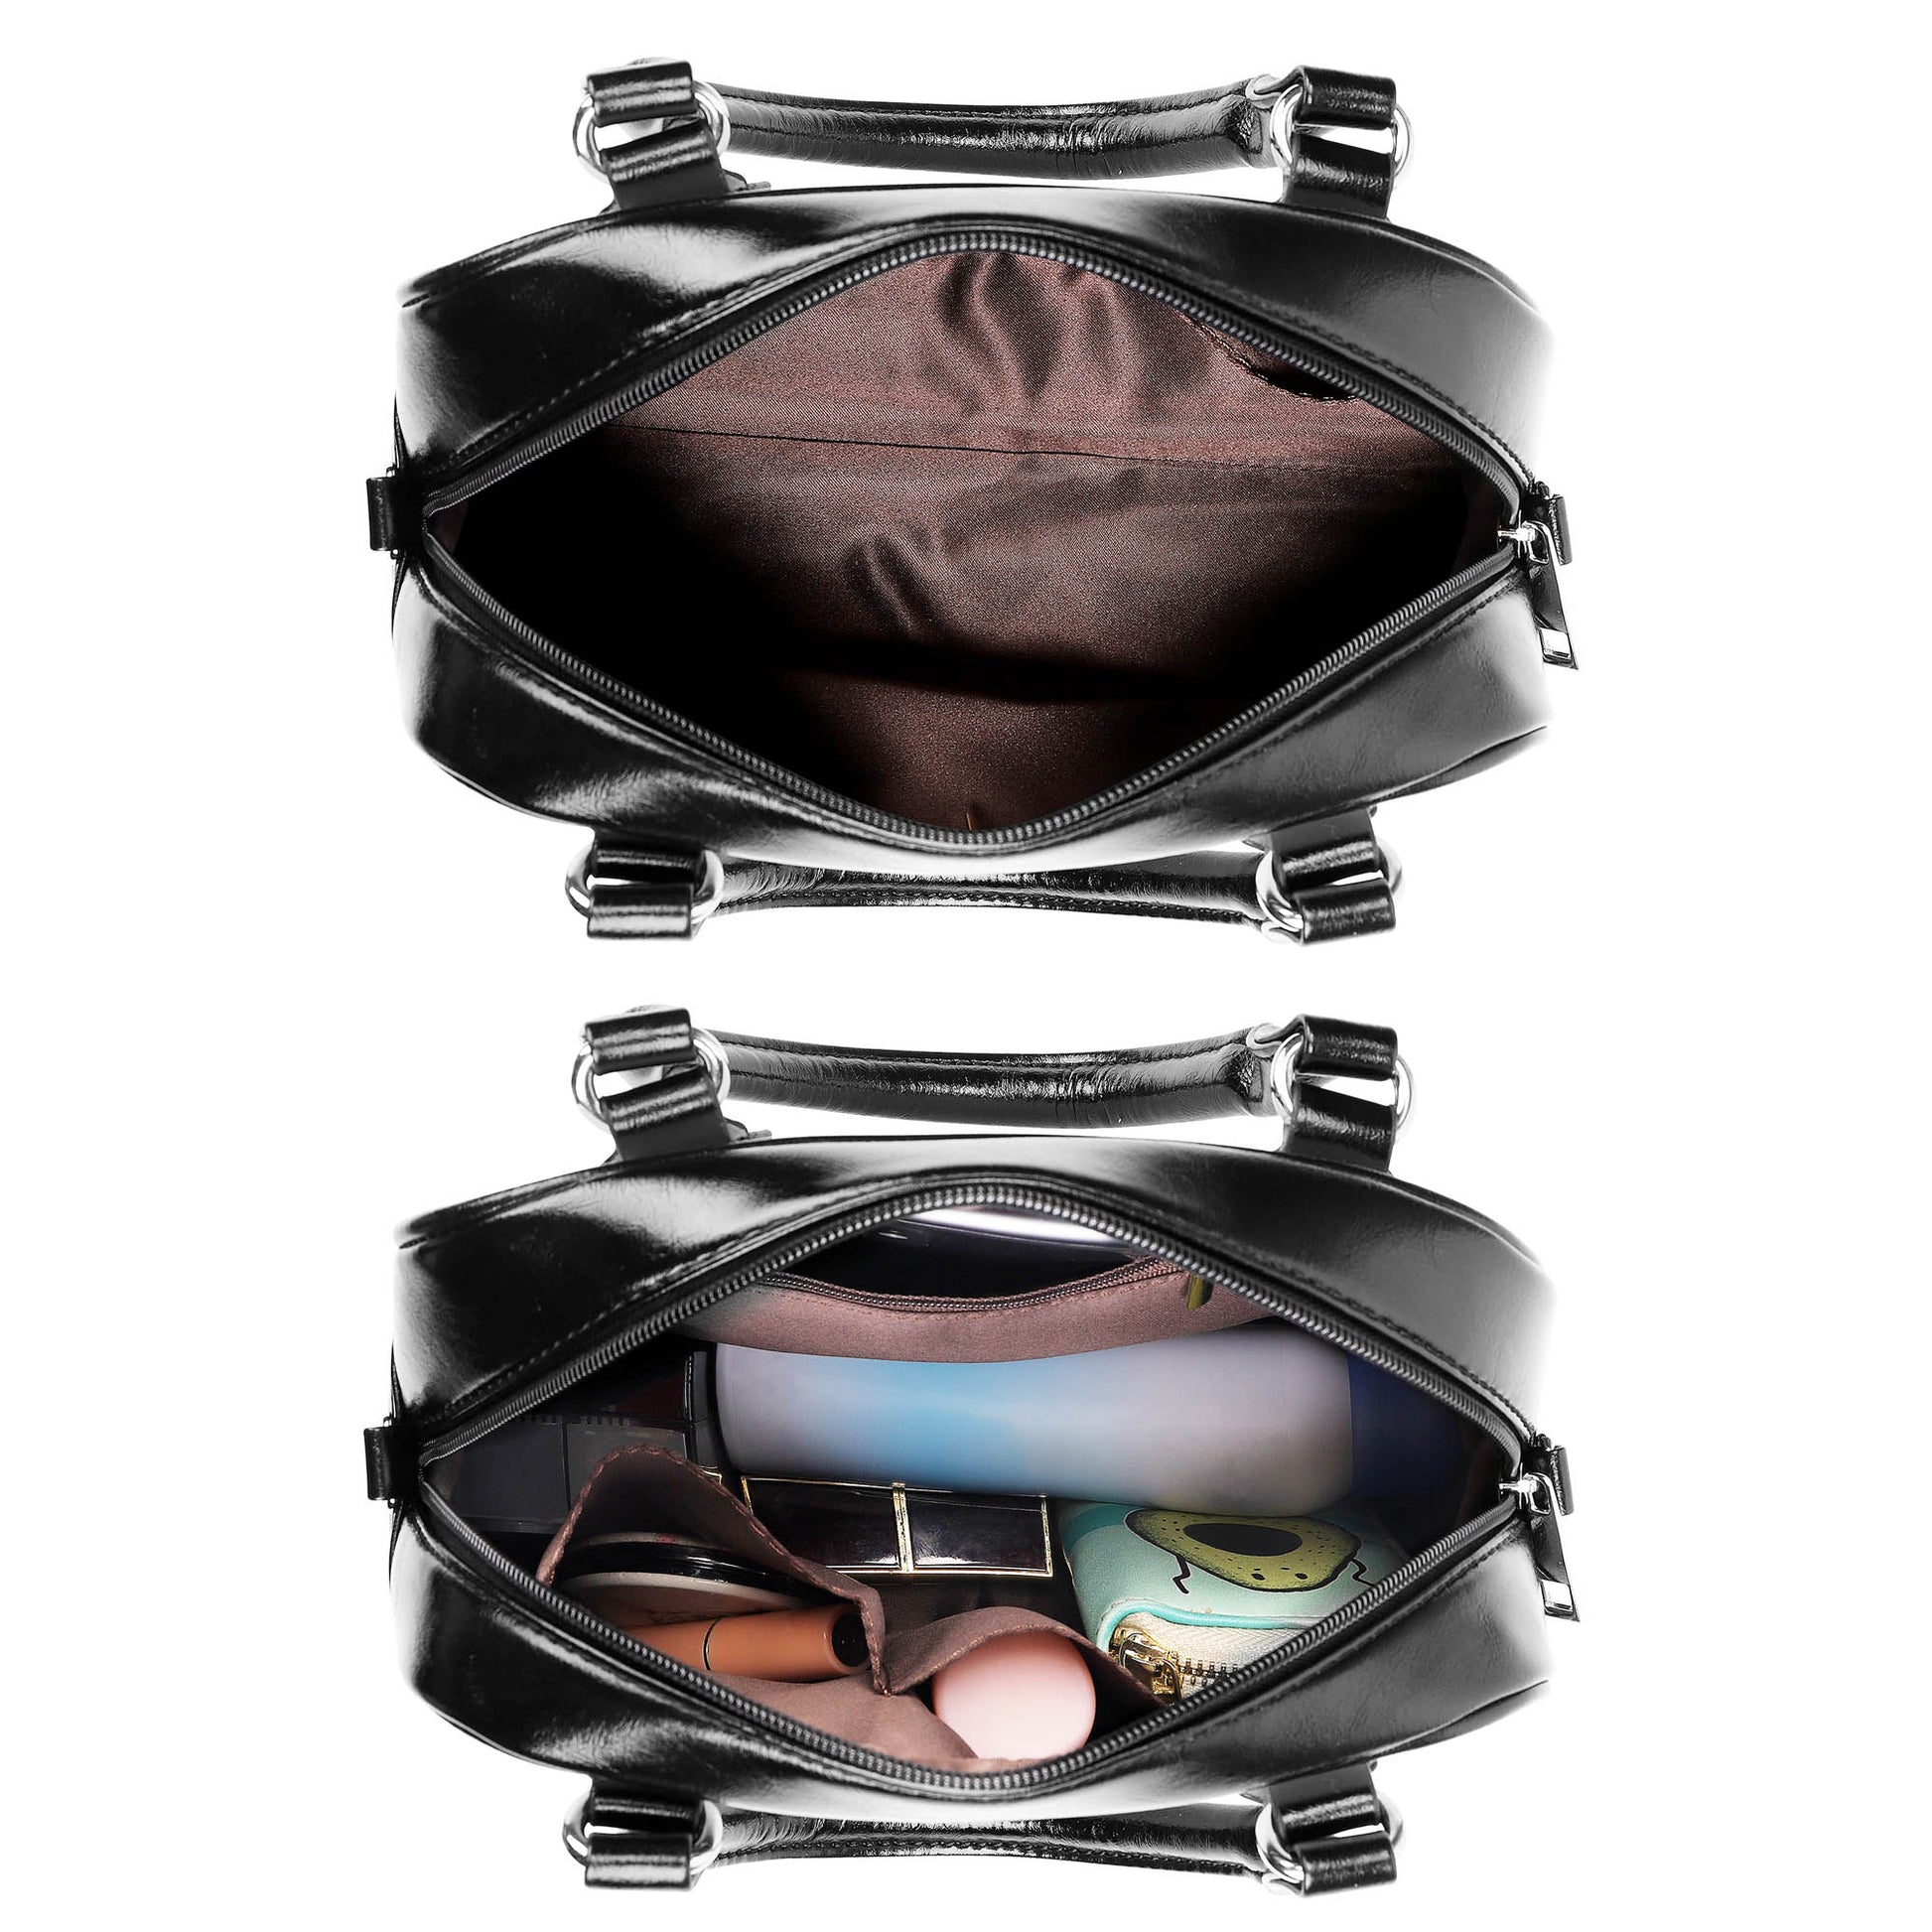 MacCorquodale Tartan Shoulder Handbags with Family Crest - Tartanvibesclothing